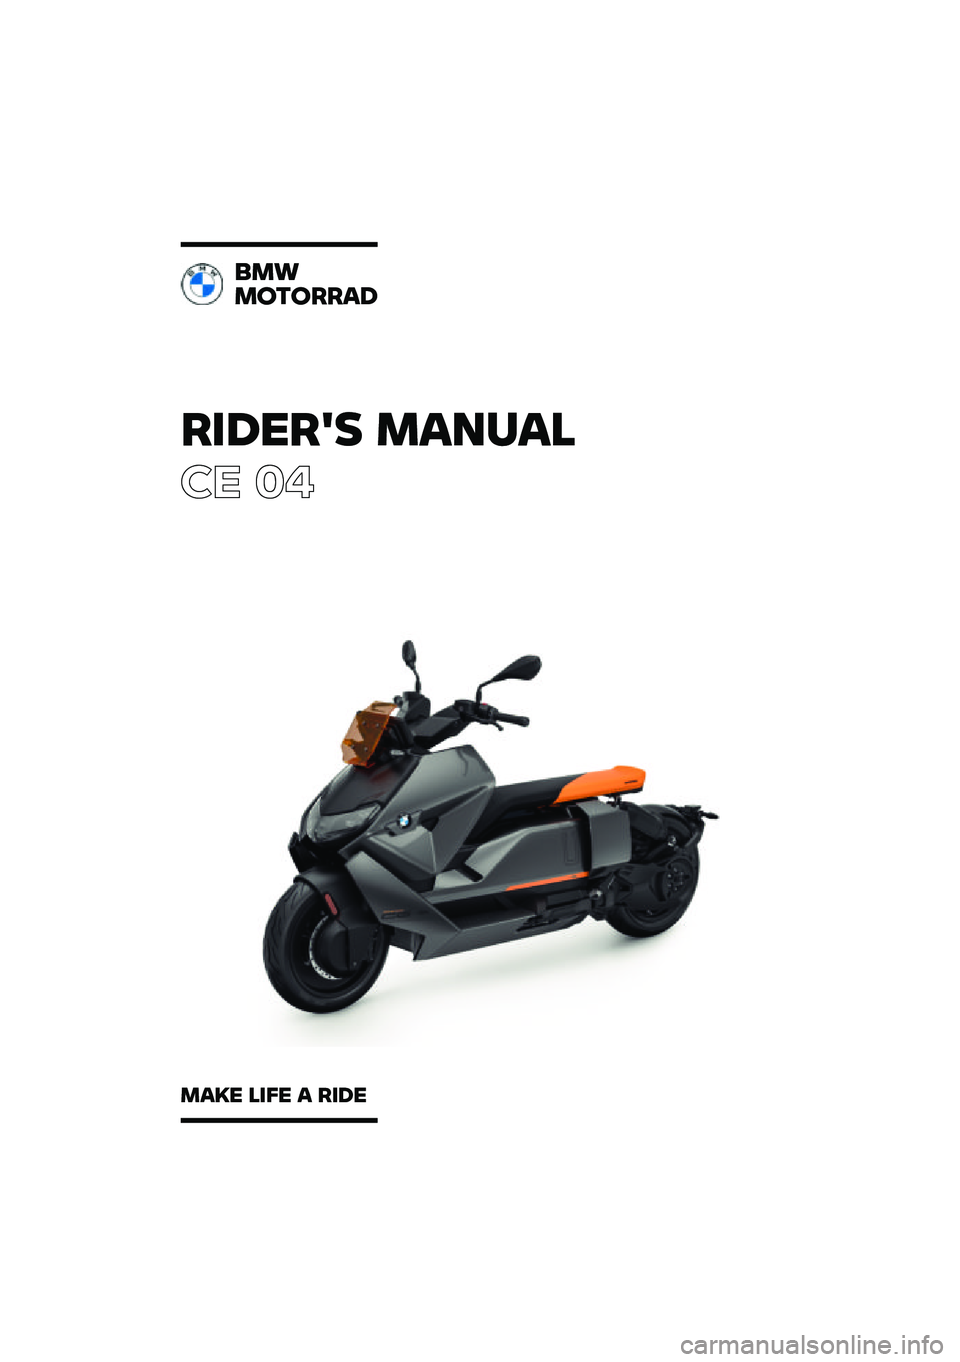 BMW MOTORRAD CE 04 2021  Riders Manual (in English) ������� �\b�	�
��	�\f
�� ��
�
�\b�
�\b������	�
�\b�	�� �\f��� �	 ���� 